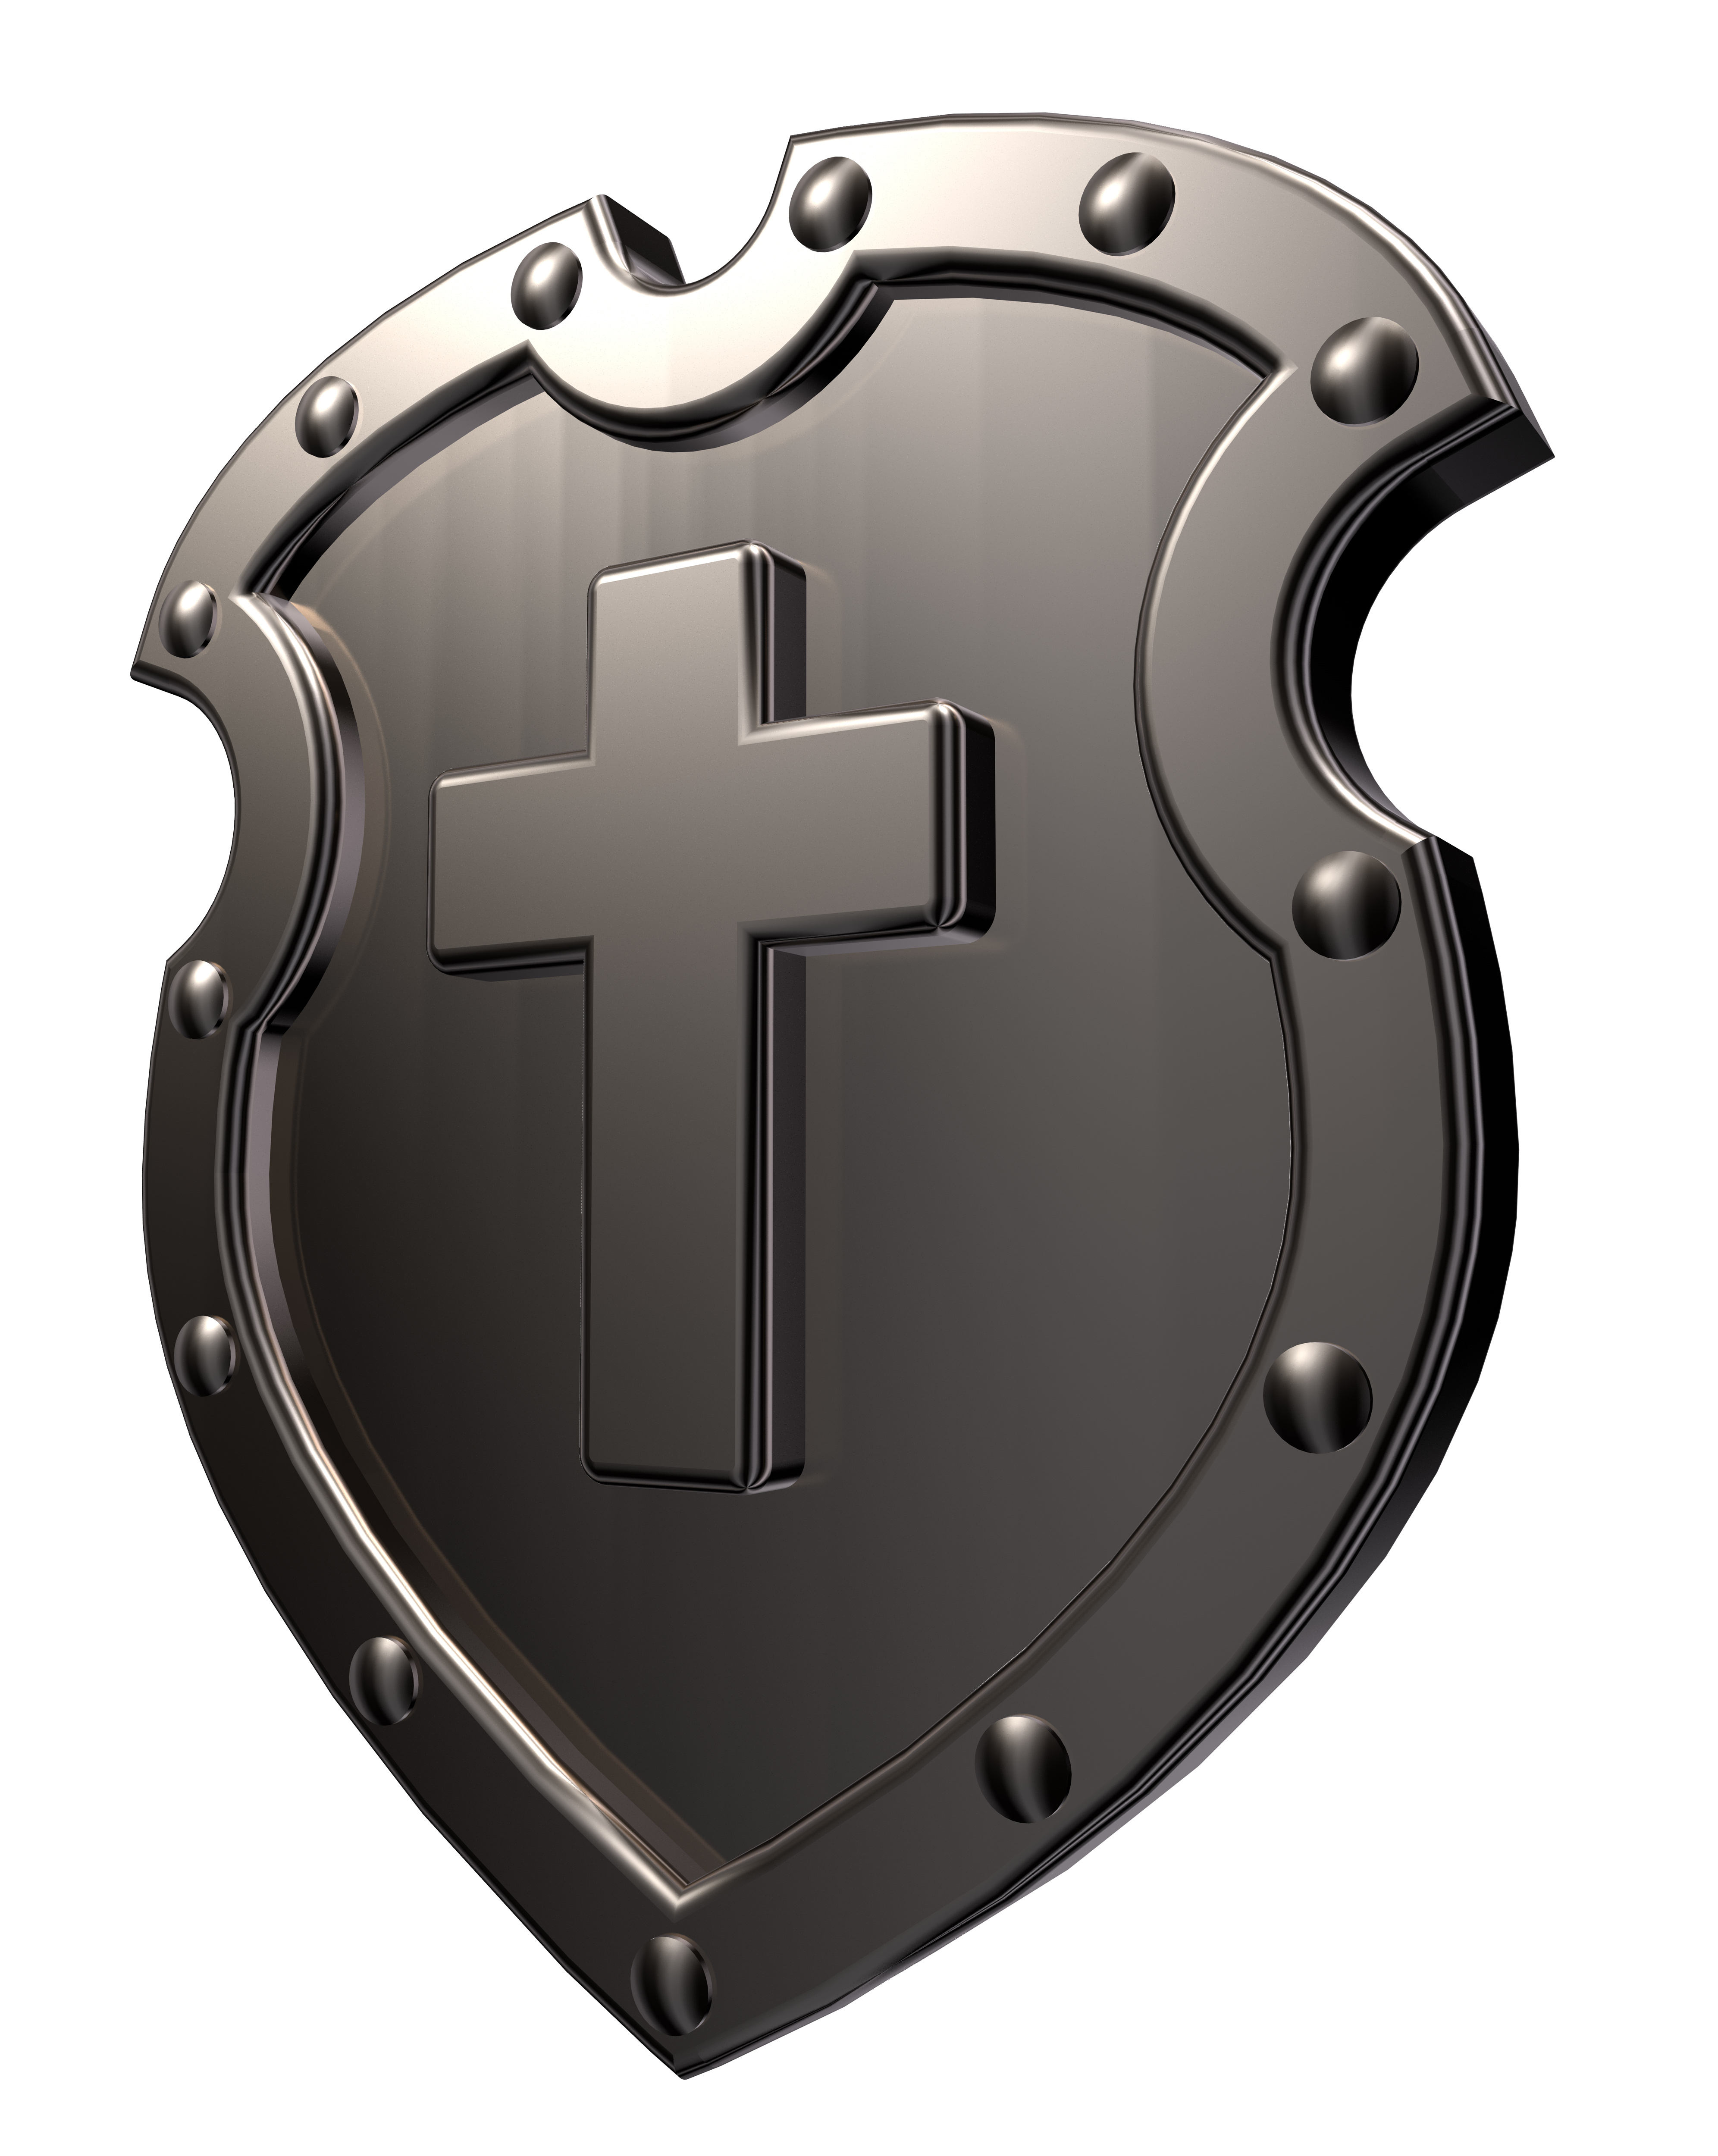 A metal shield shape with a cross on it